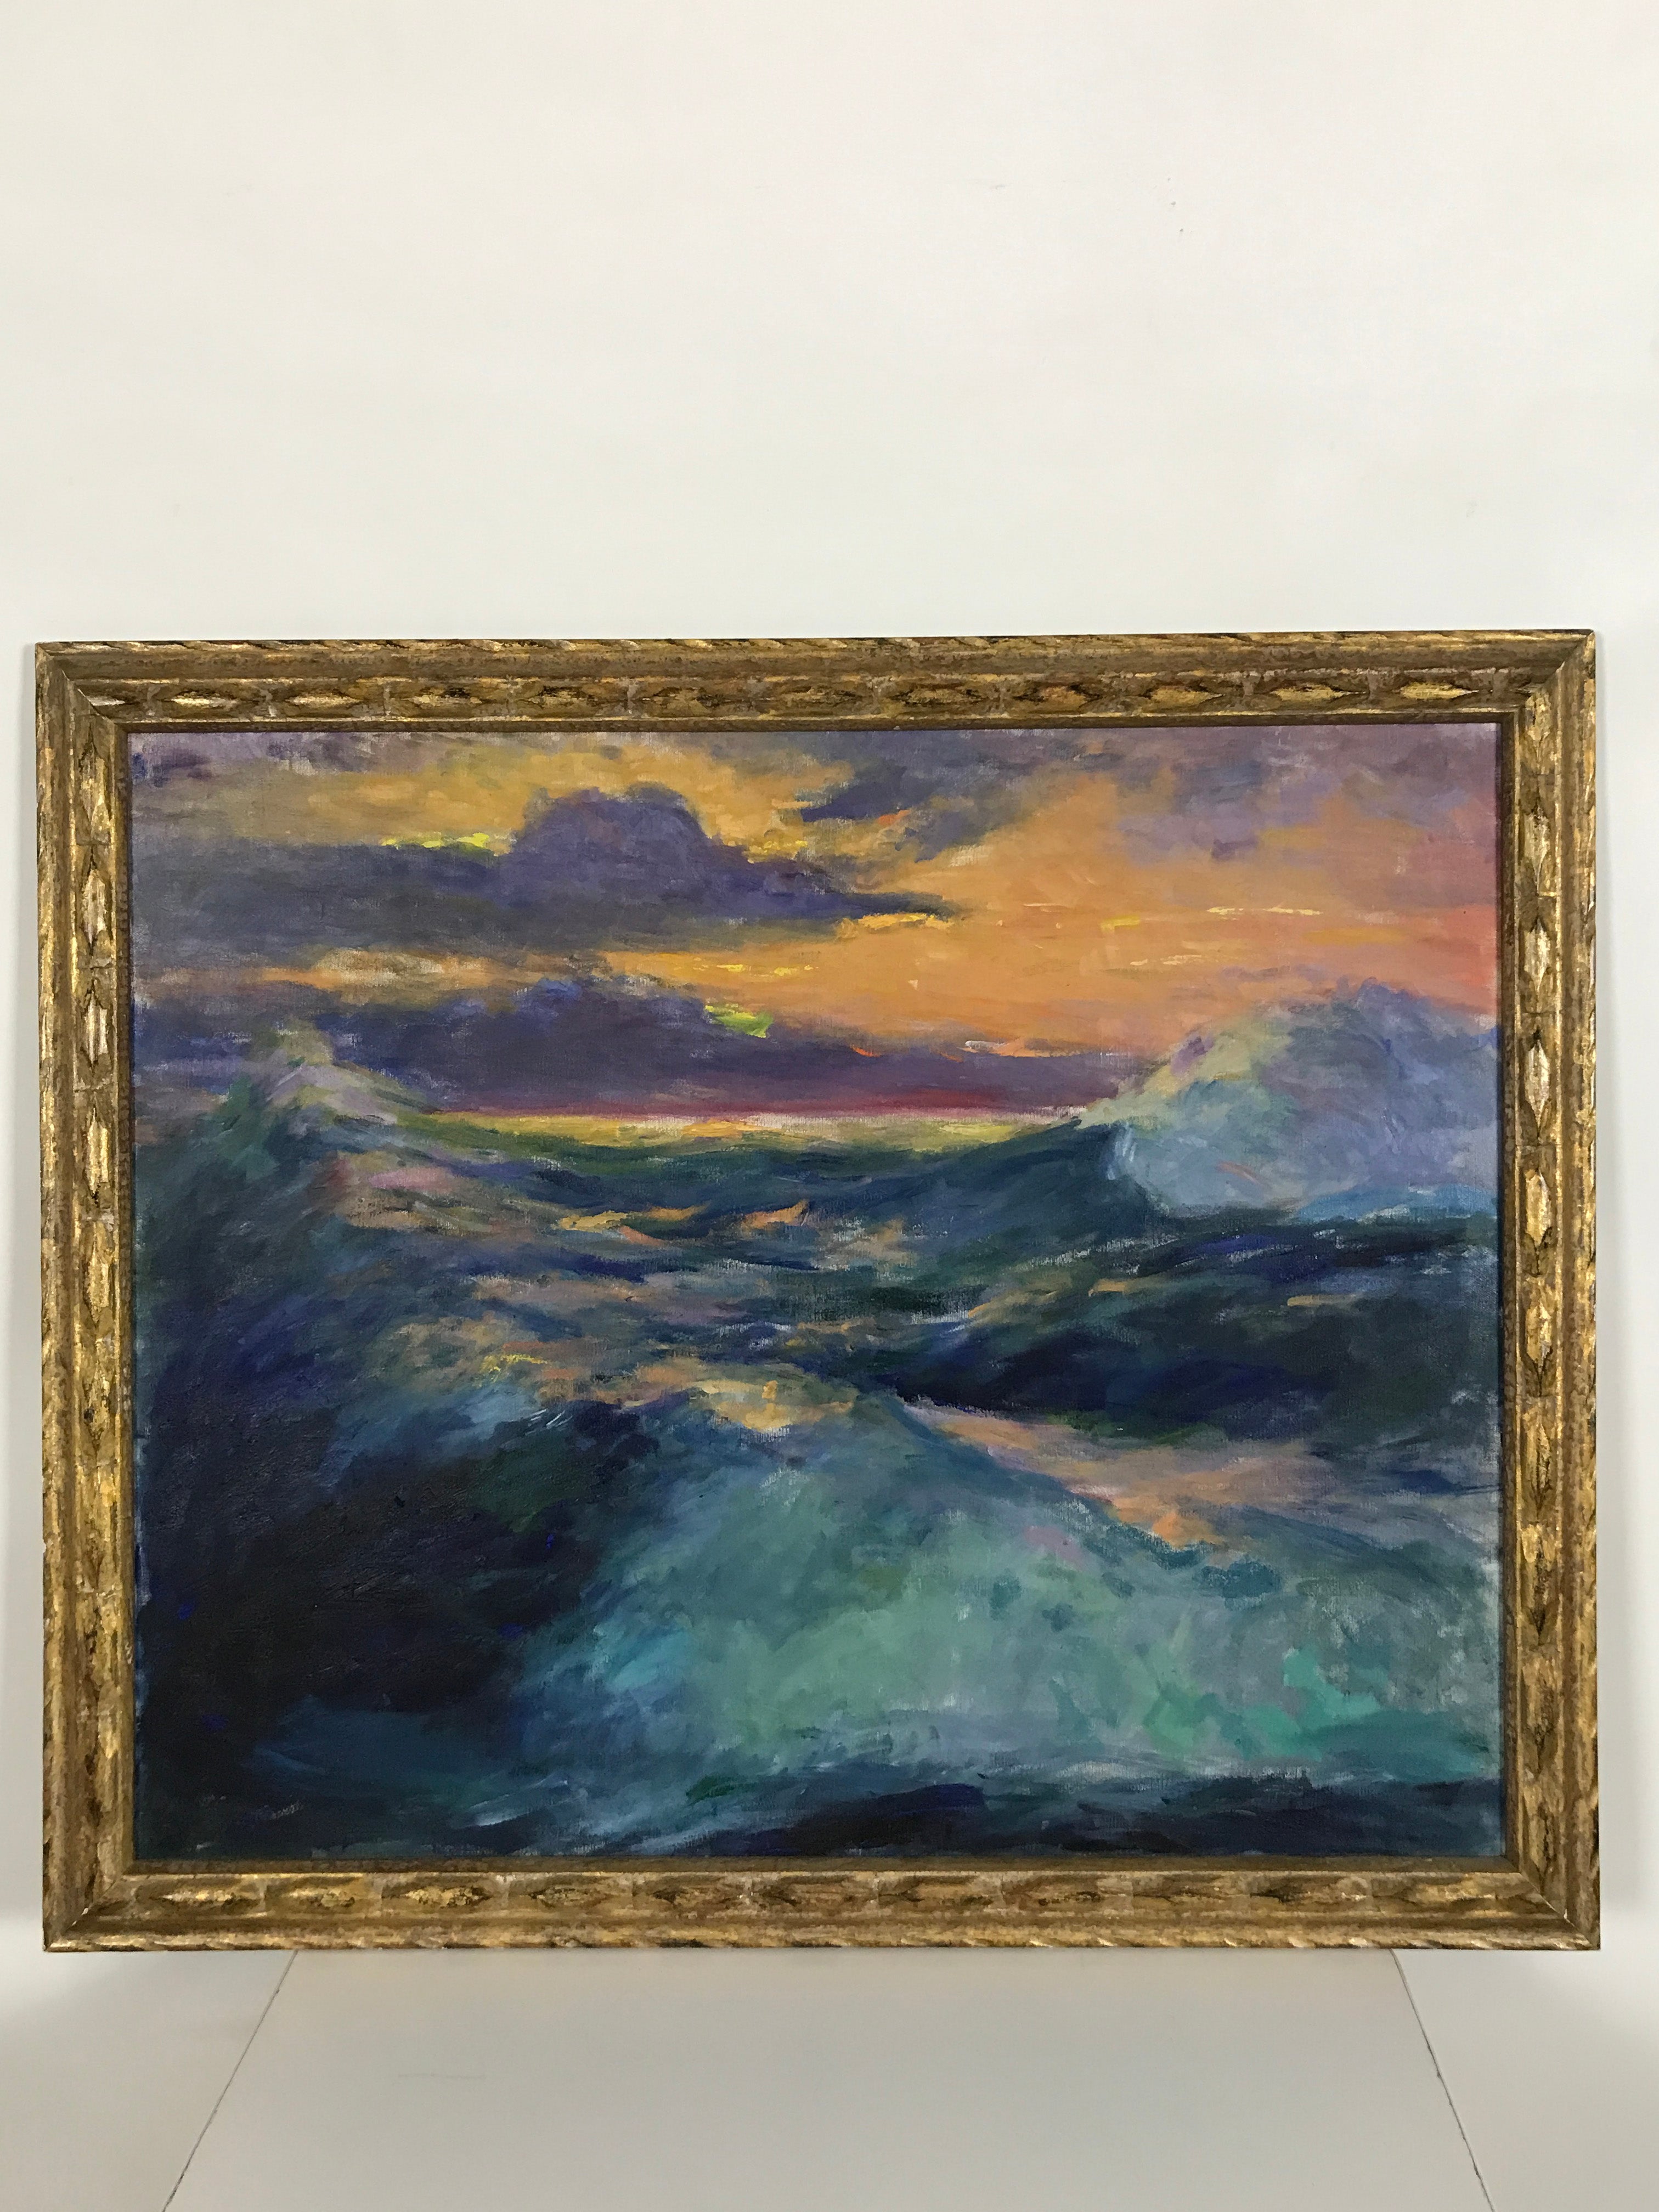 Framed Ocean Sunset Oil Painting on Canvas